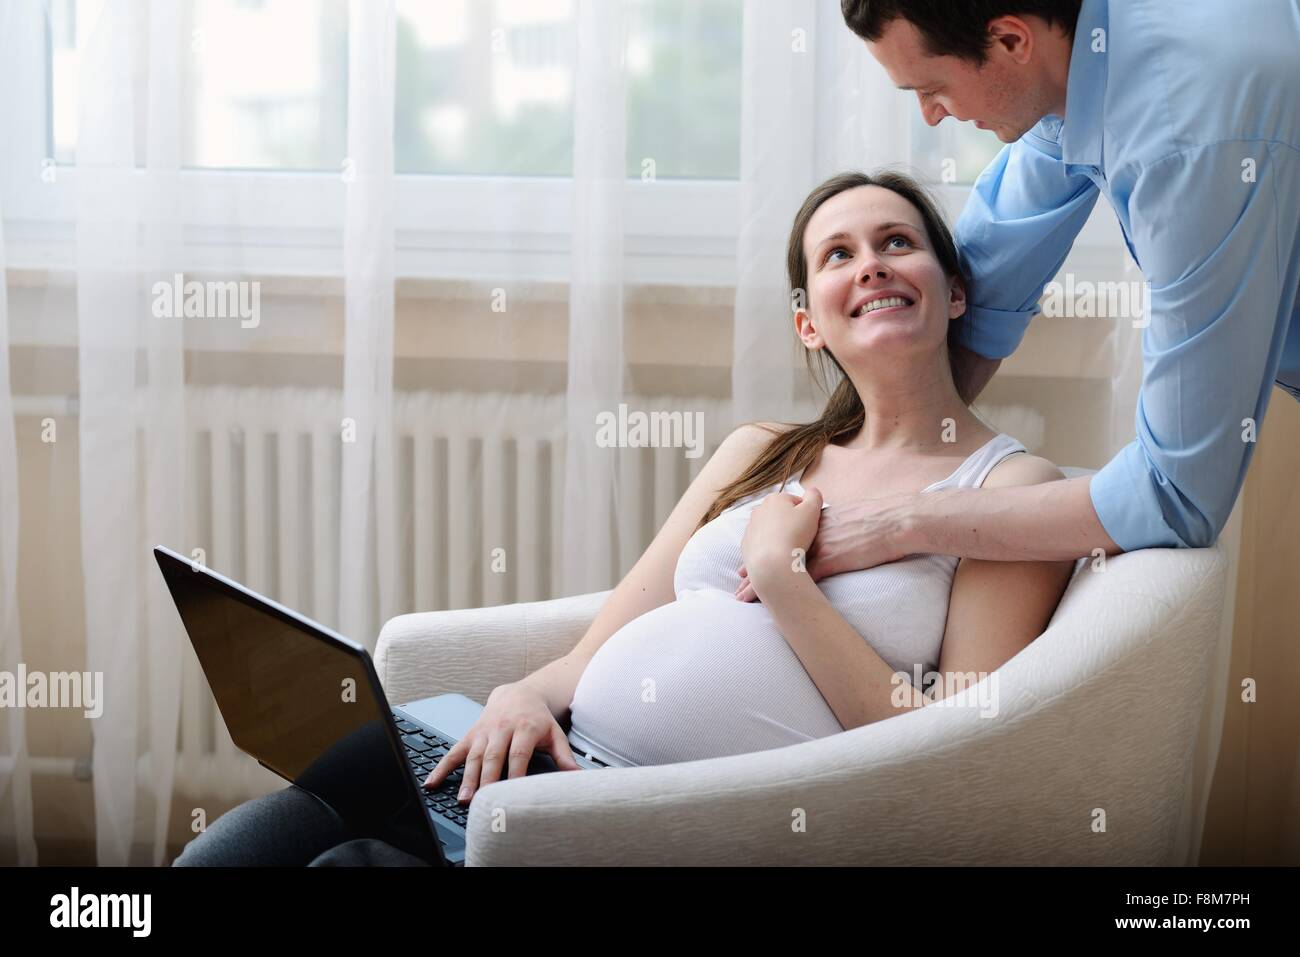 https://c8.alamy.com/comp/F8M7PH/pregnant-woman-sitting-in-chair-using-laptop-husband-holding-her-hand-F8M7PH.jpg